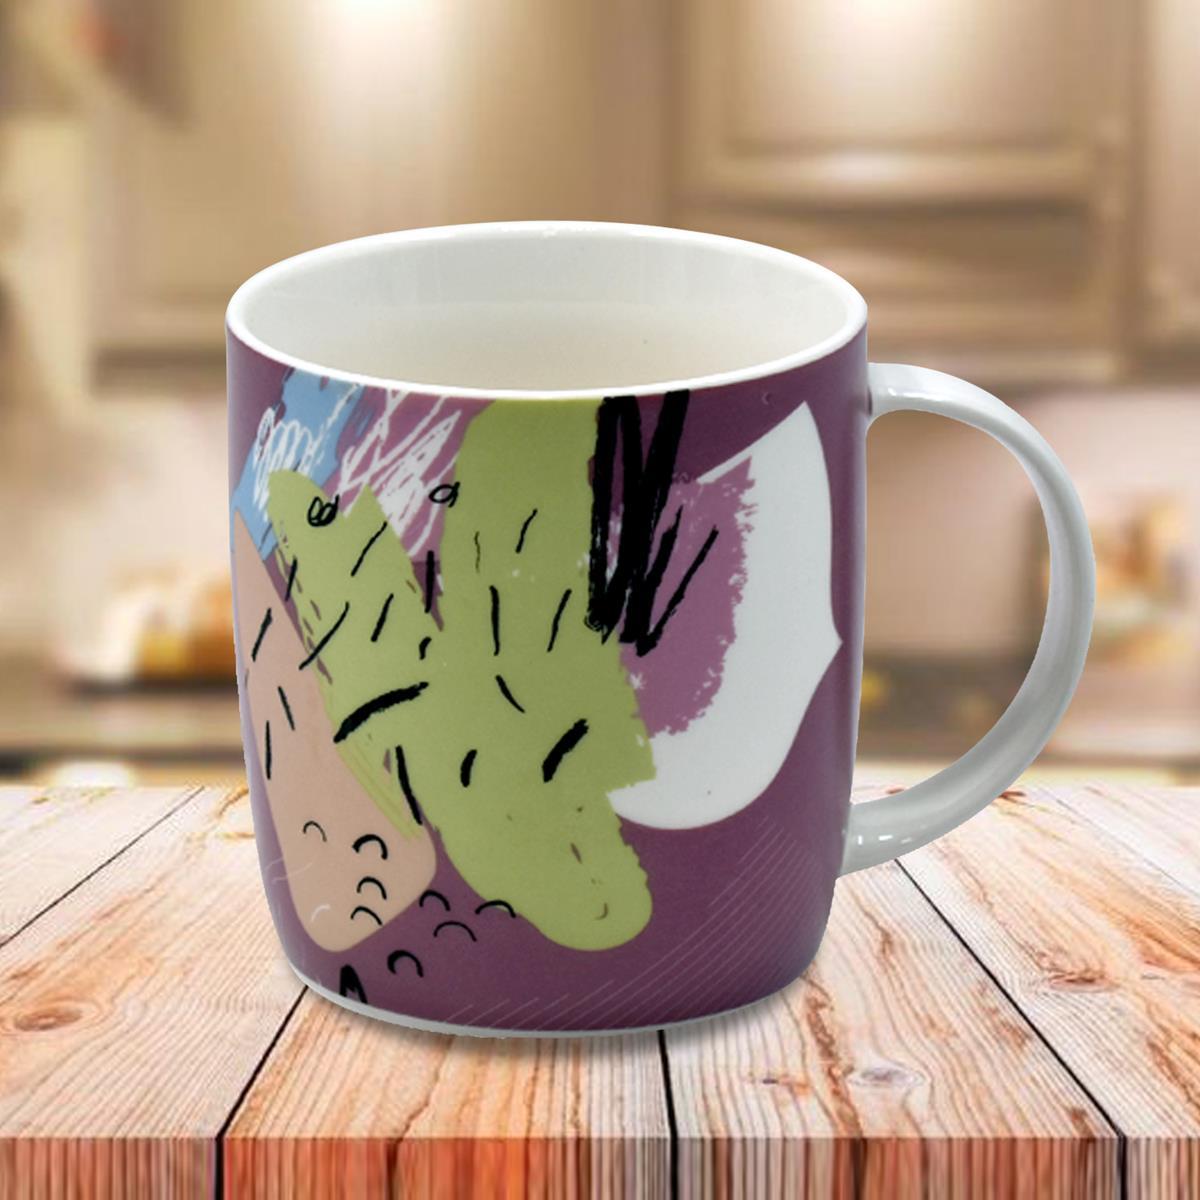 Kookee Ceramic Coffee or Tea Mug with handle for Office, Home or Gifting - 325ml (R4901-E)